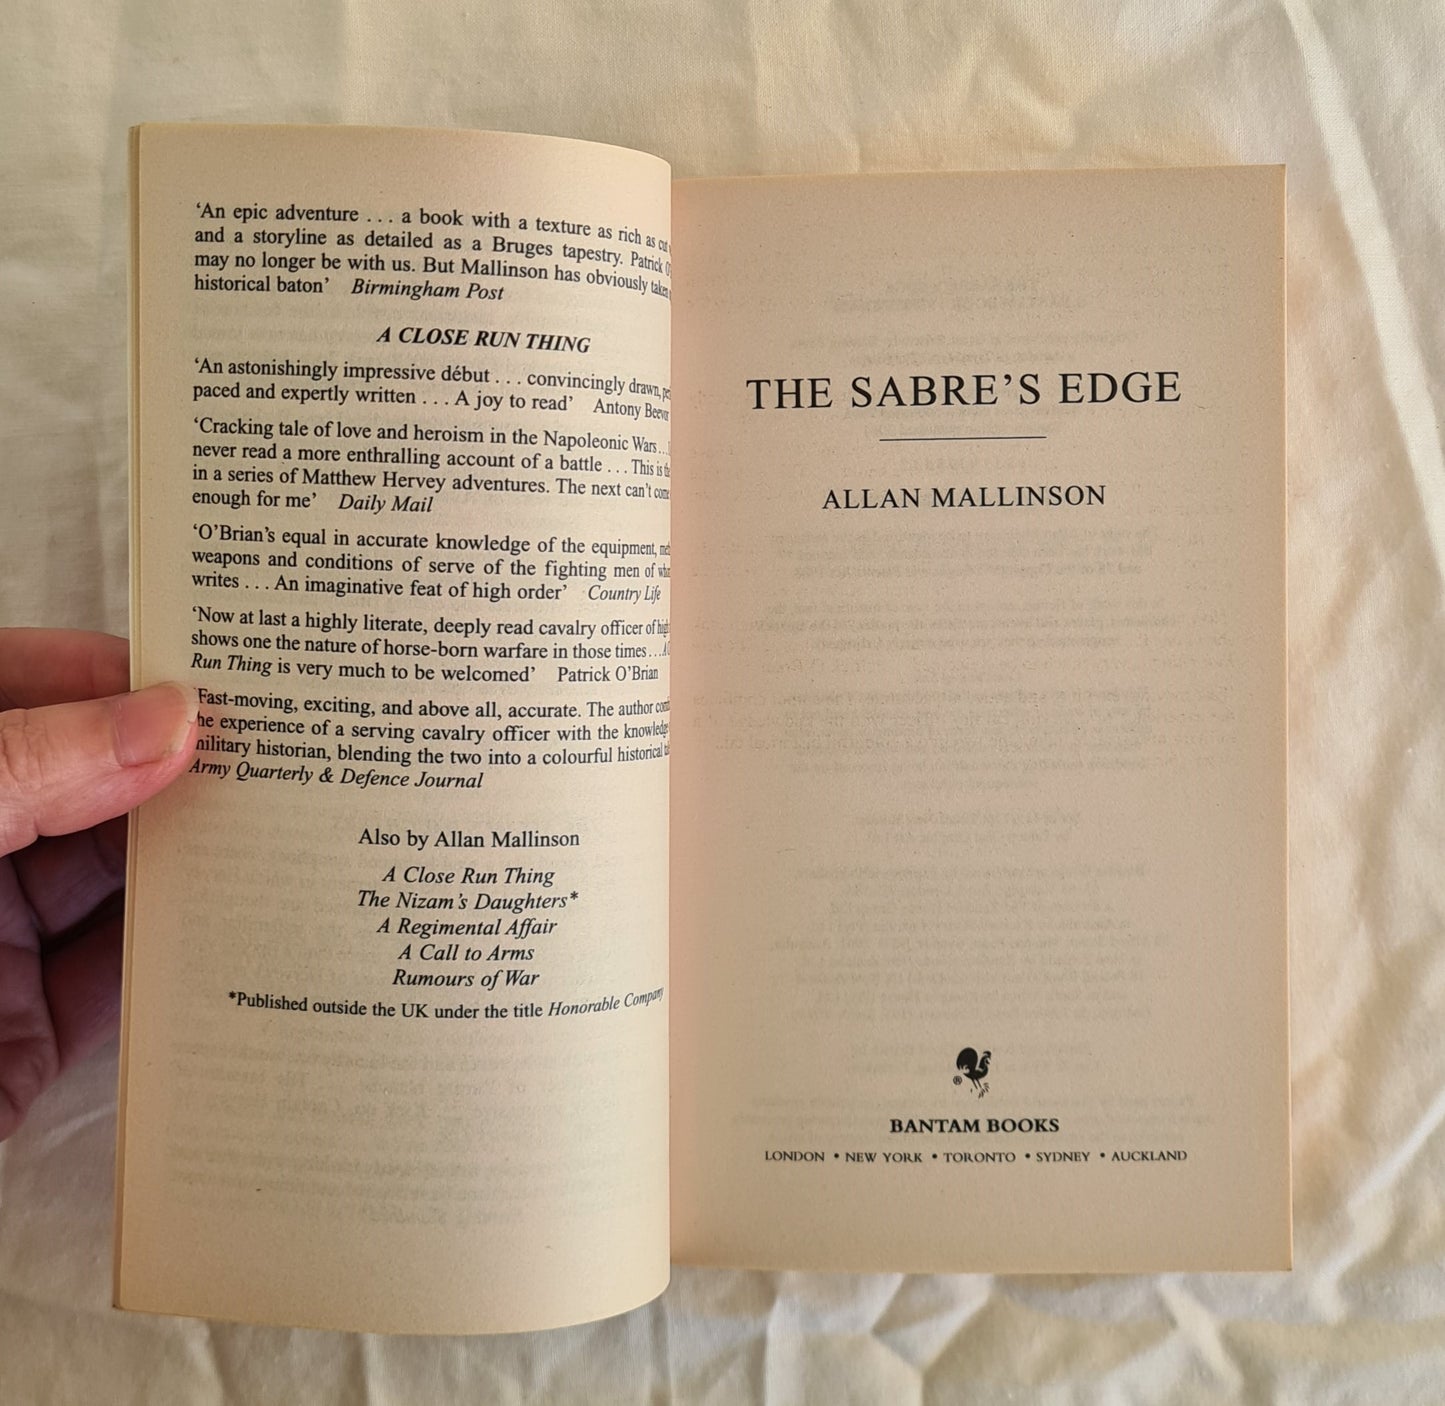 The Sabre’s Edge by Allan Mallinson